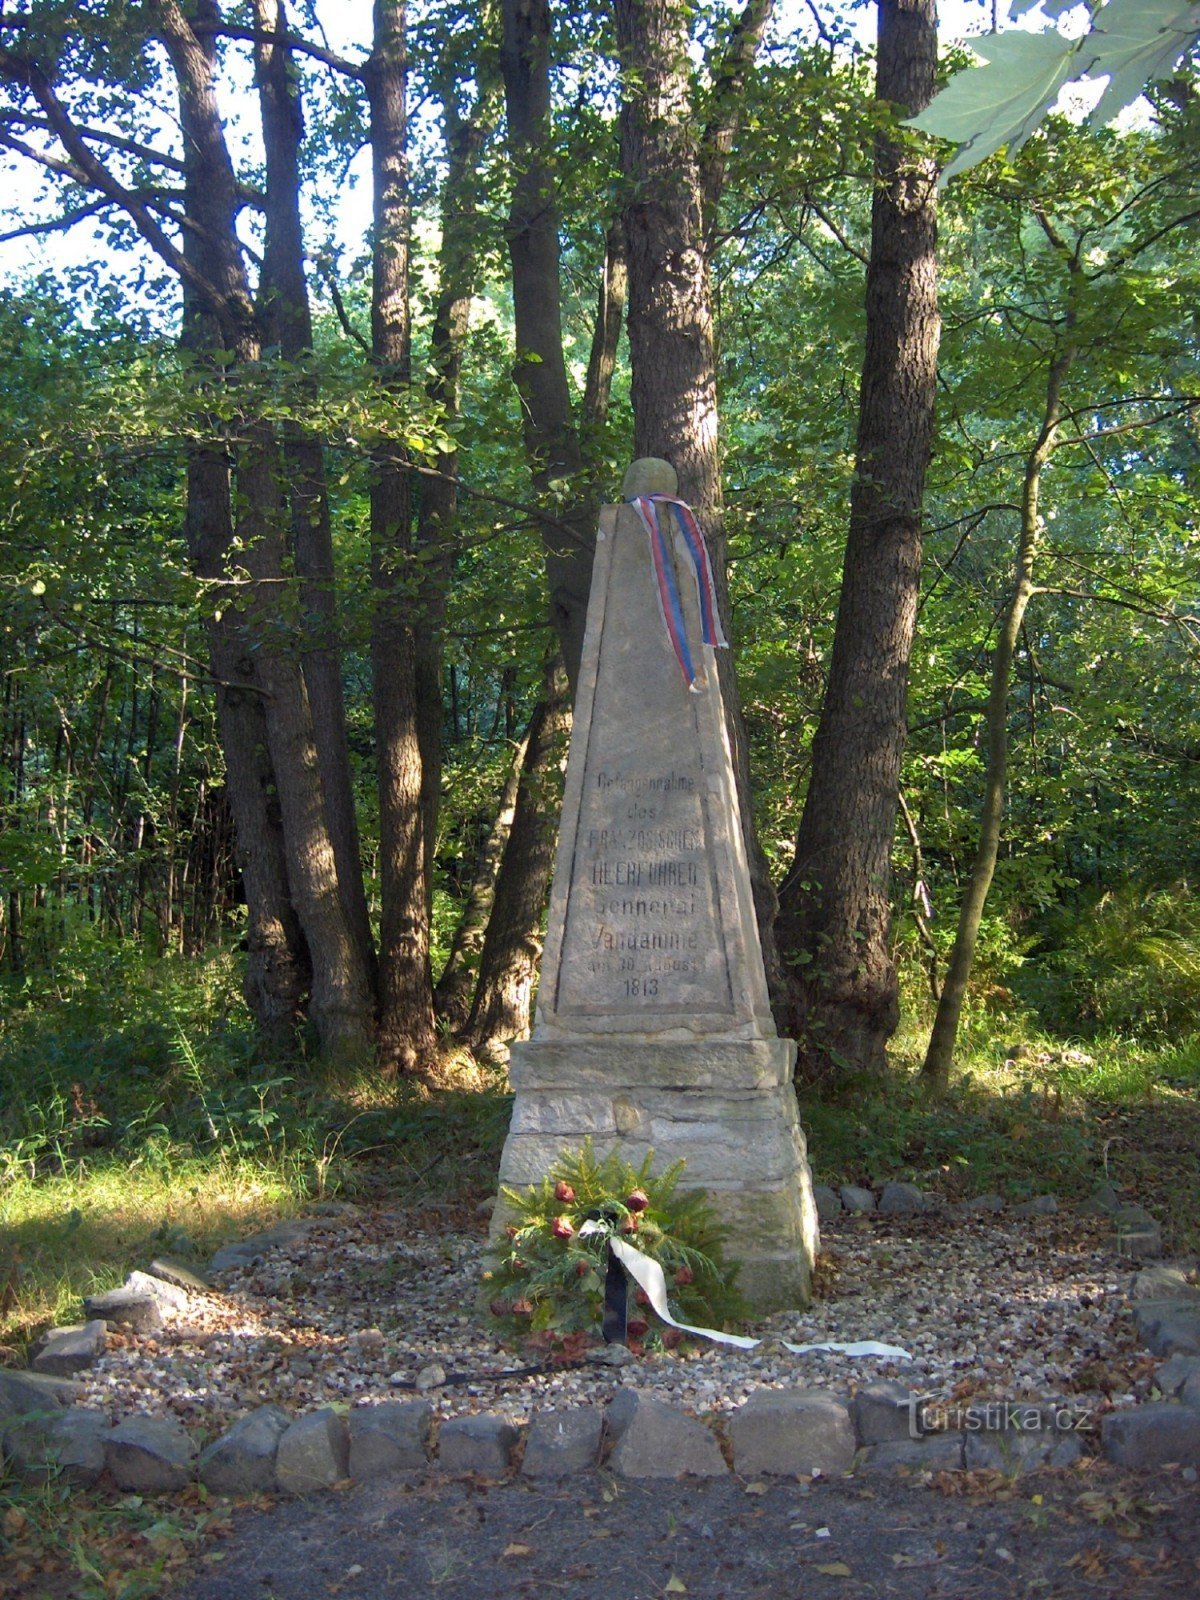 memorial to the capture of General Vandamme